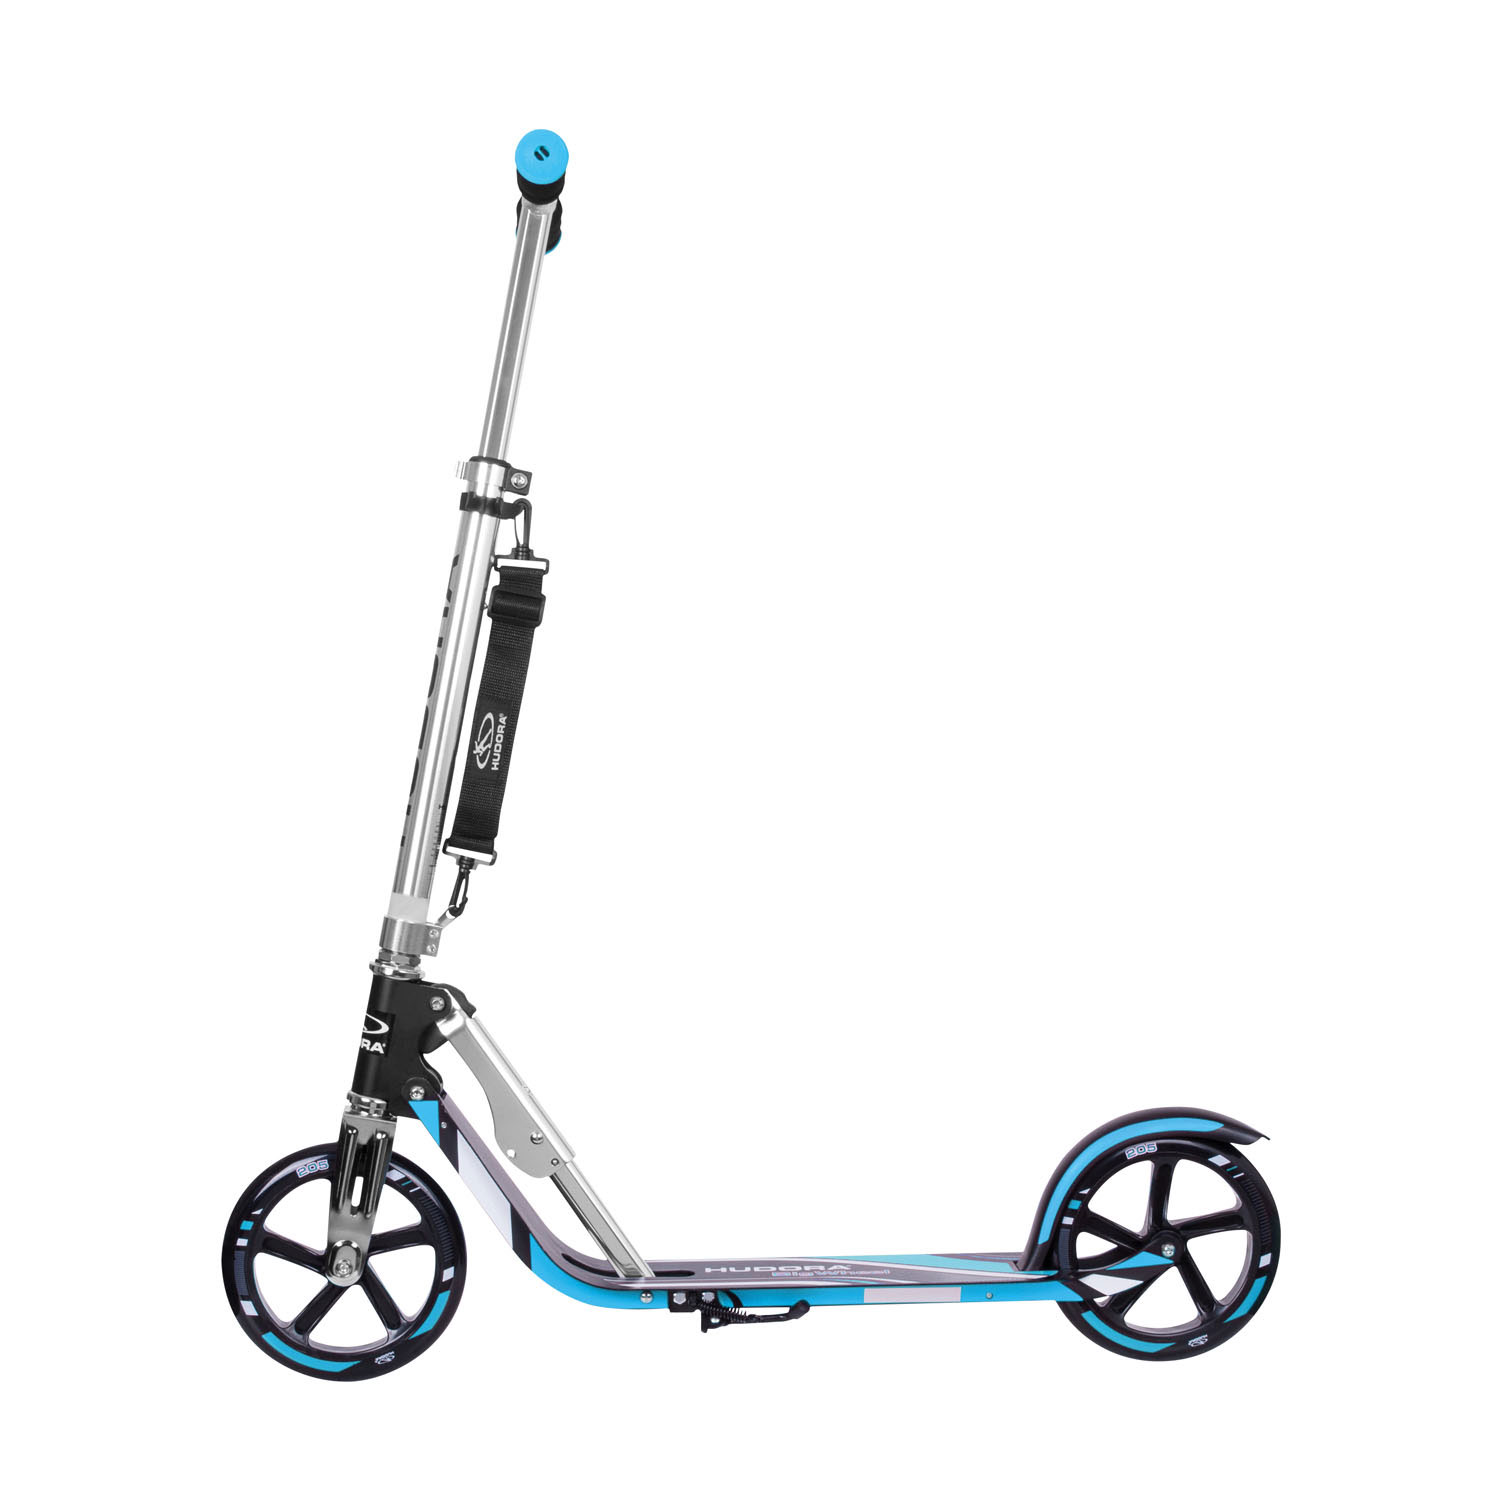 HUDORA Scooter Big Wheel Step RX205 - Zwart/Blauw